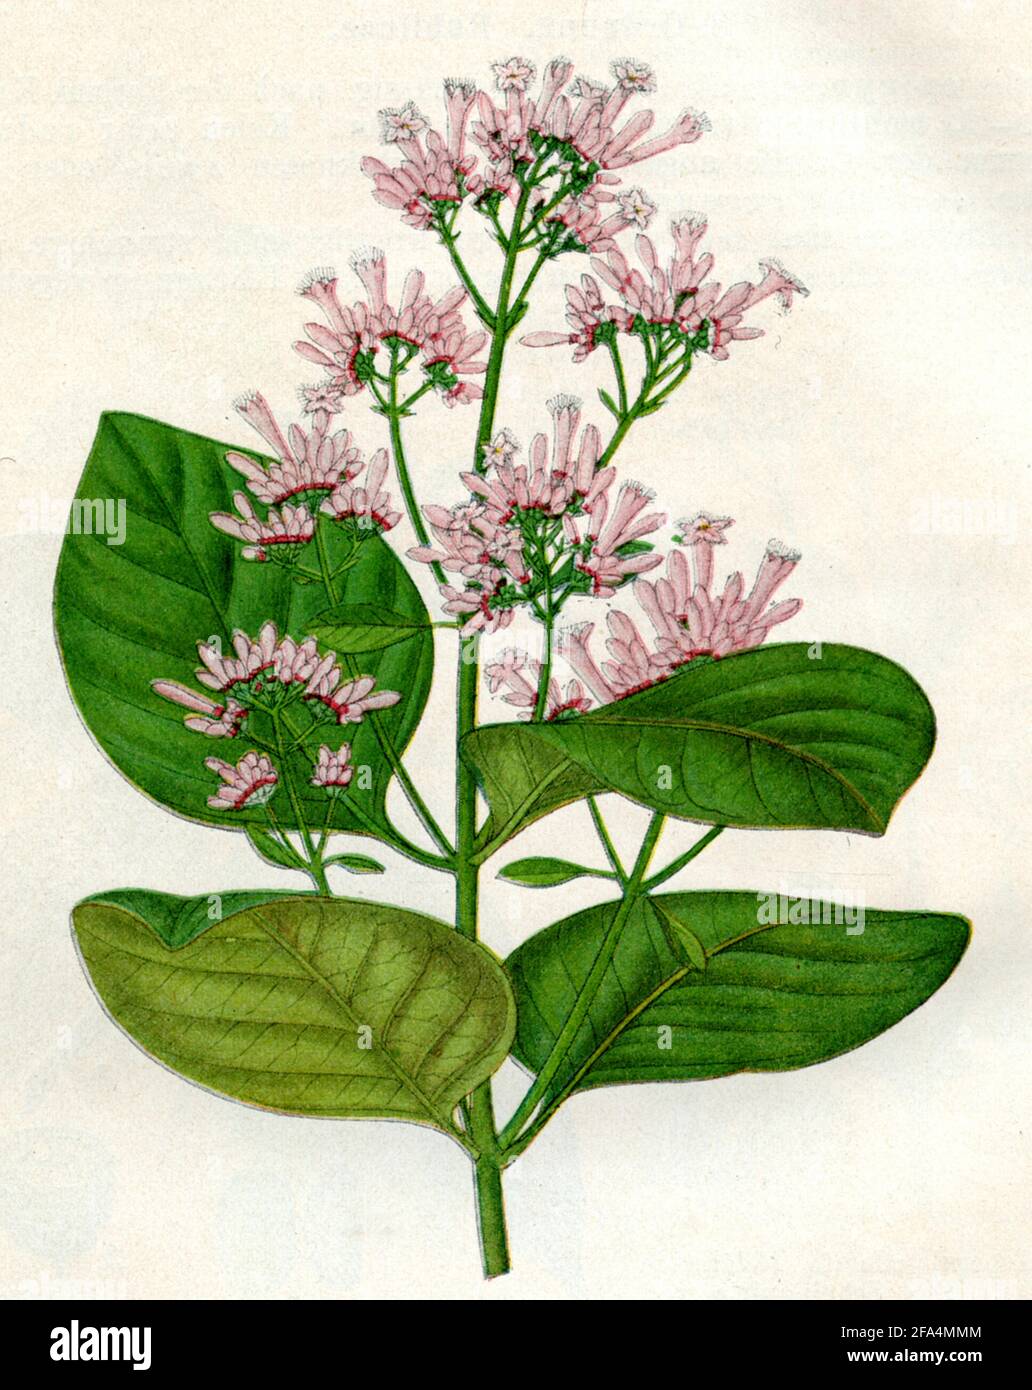 red cinchona / Cinchona pubescens, Syn. Cinchona succirubra / Chinarindenbaum, Roter  / botany book, 1900) Stock Photo